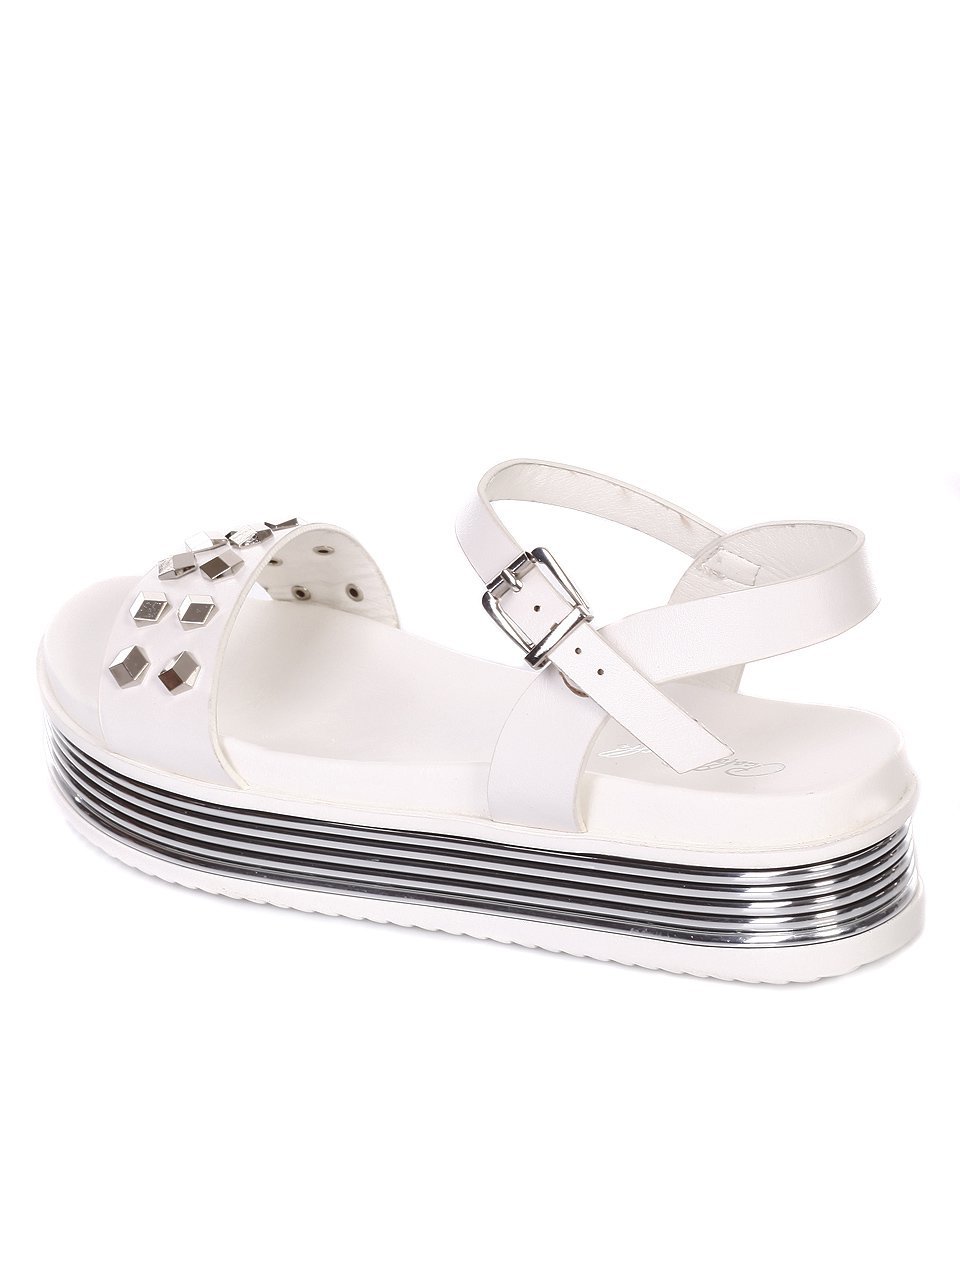 Ежедневни дамски сандали на платформа в бяло 4F-18327 white